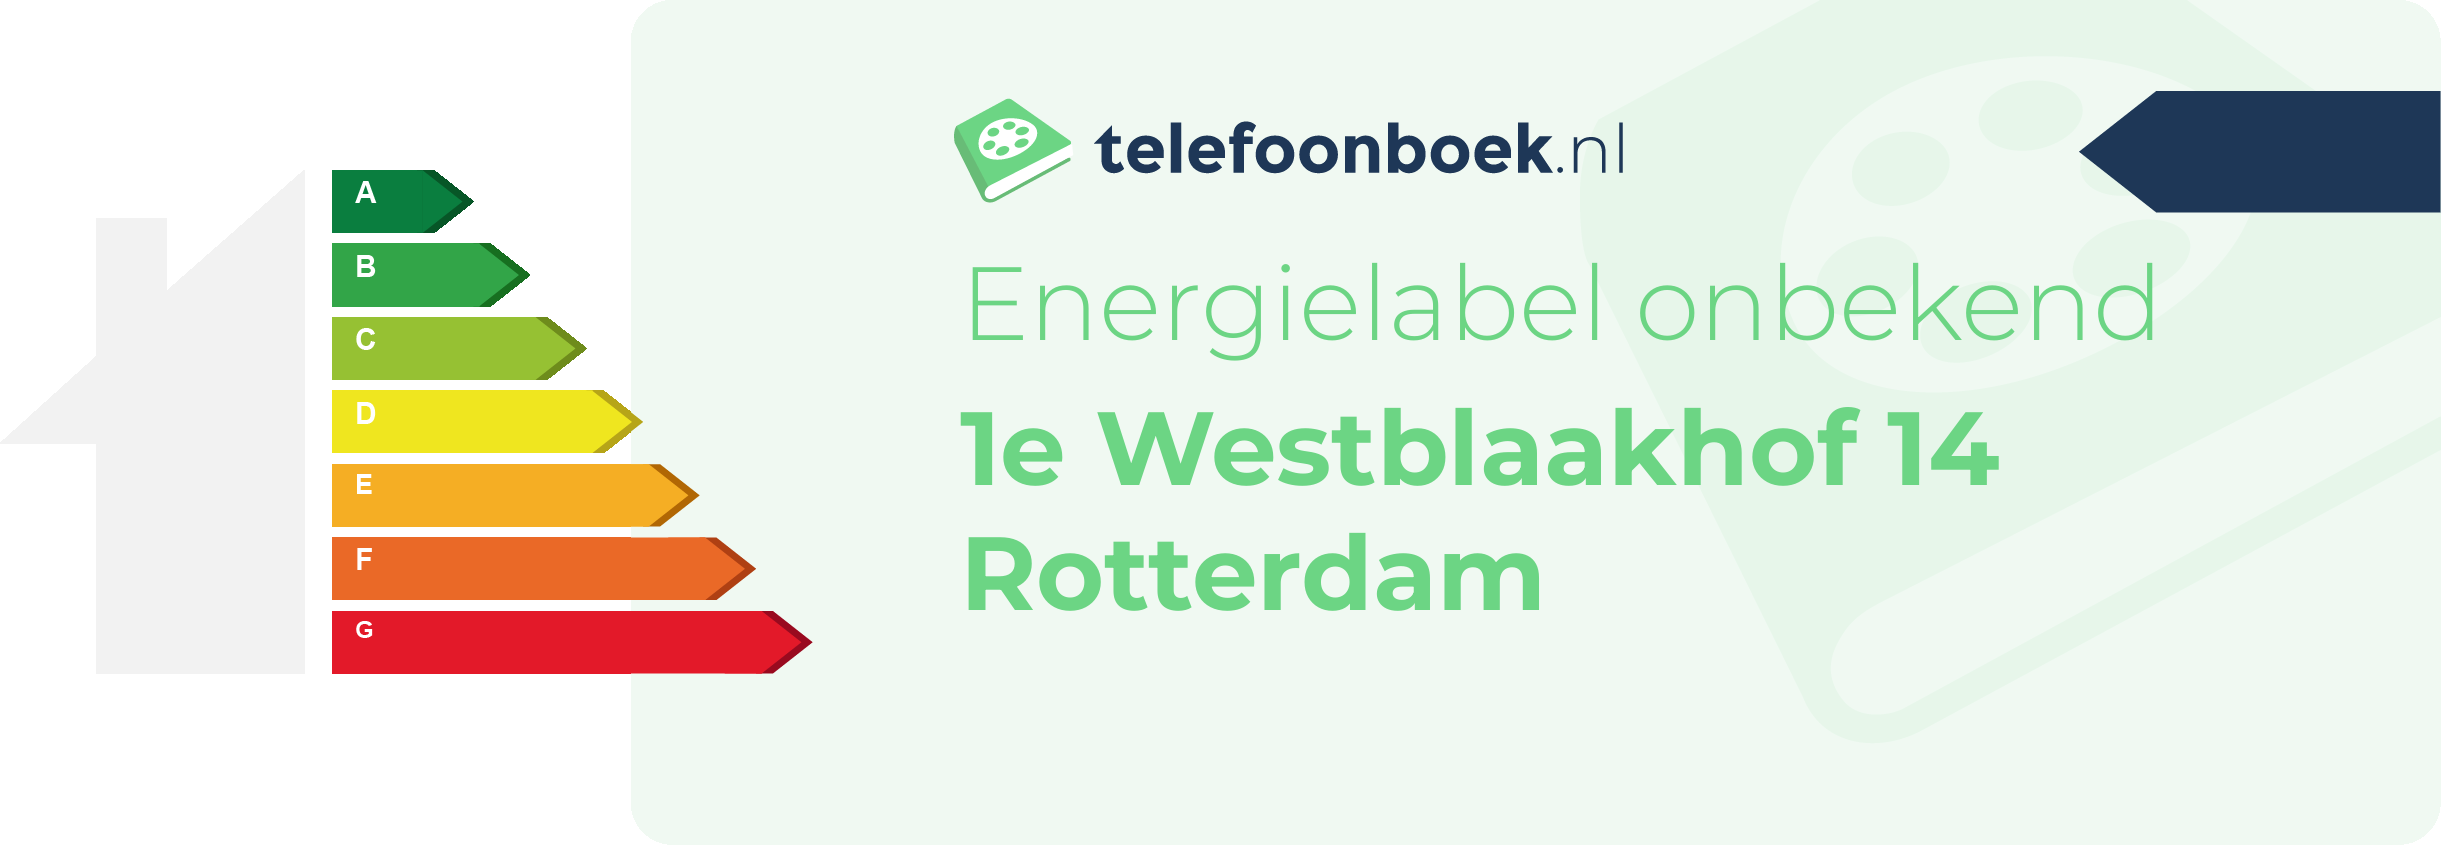 Energielabel 1e Westblaakhof 14 Rotterdam